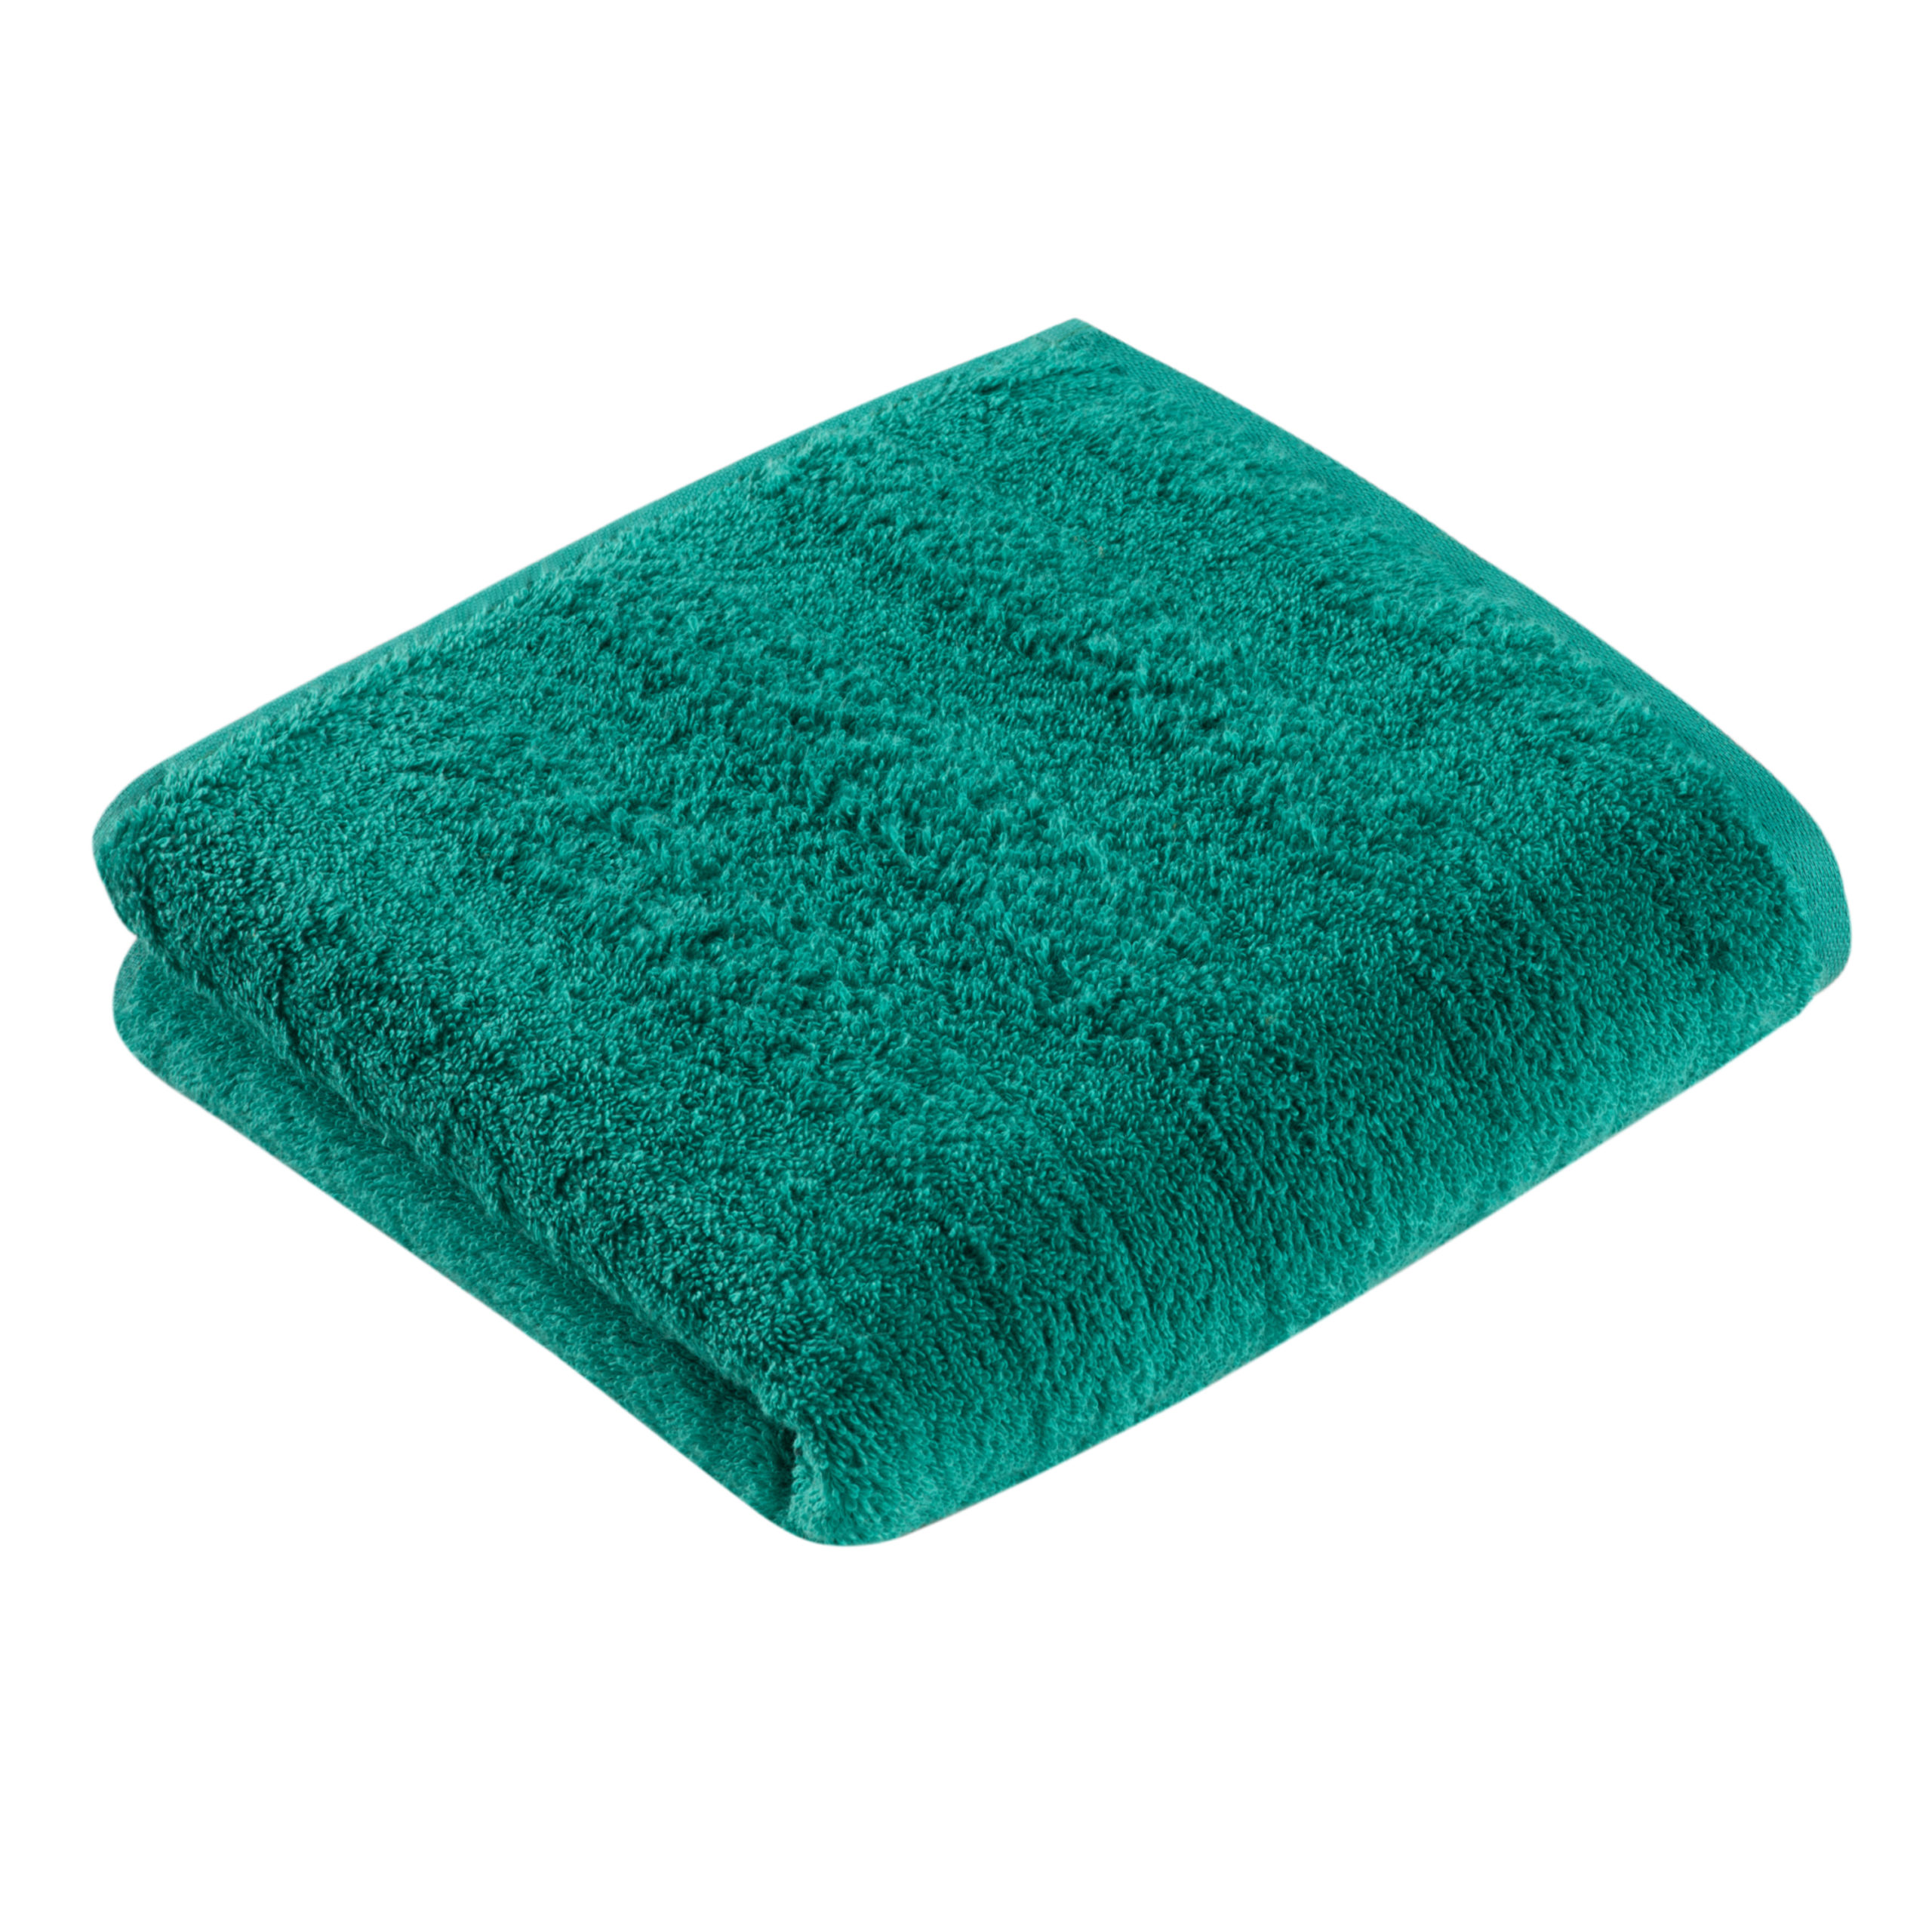 Vossen ręcznik fresh 5845 ocean teal